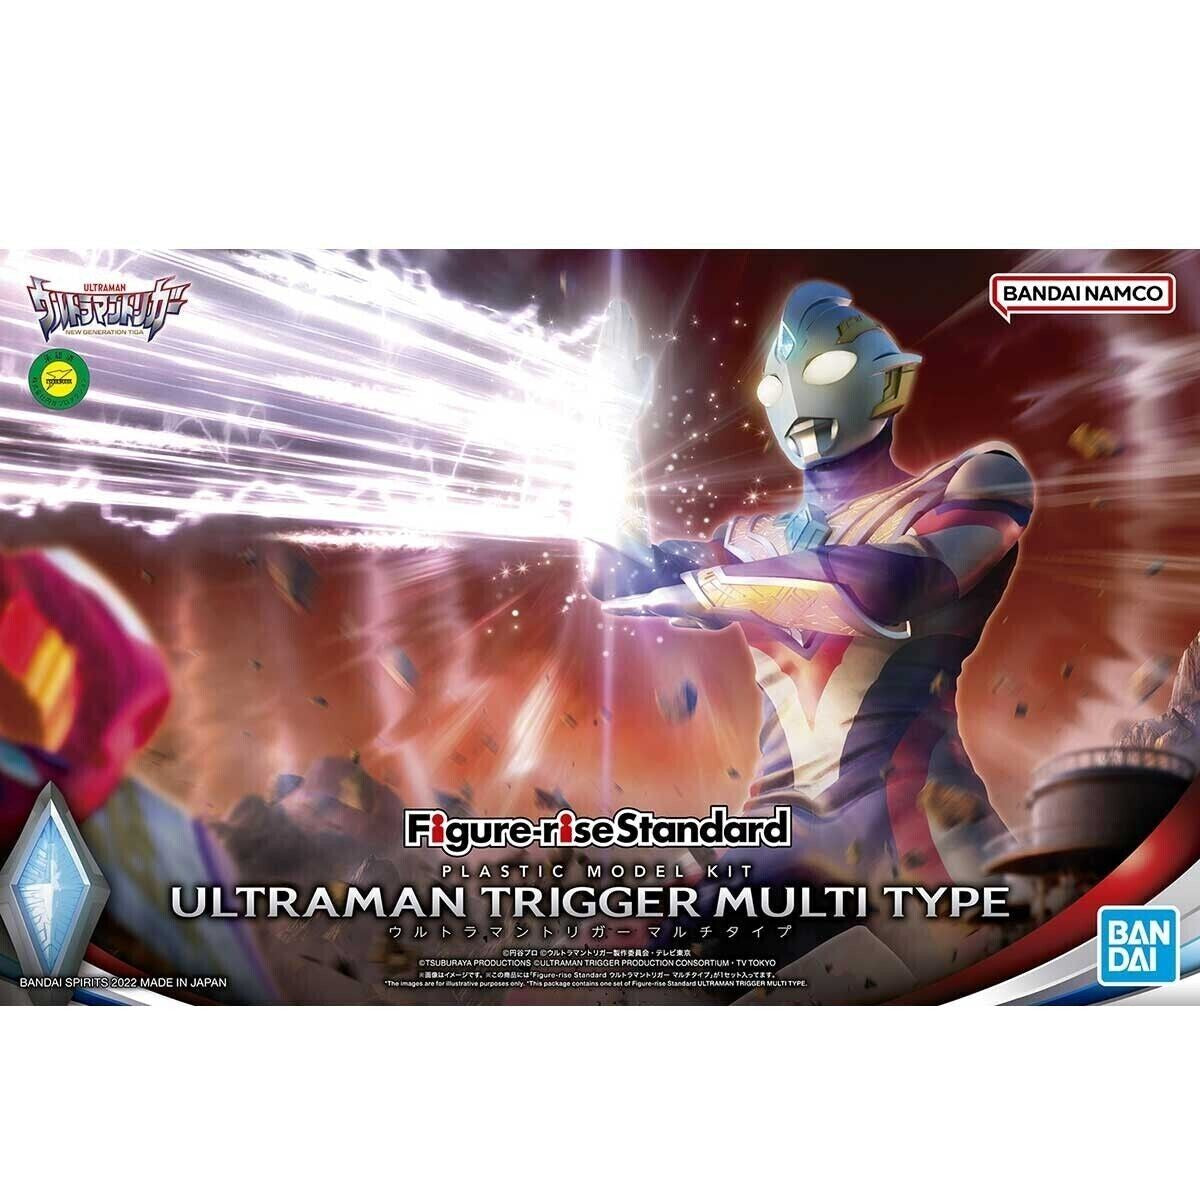 Ultraman Suit Trigger Multi Type 1/12 - Figure-Rise Standard #5064012 Action Figure Model Kit by Bandai